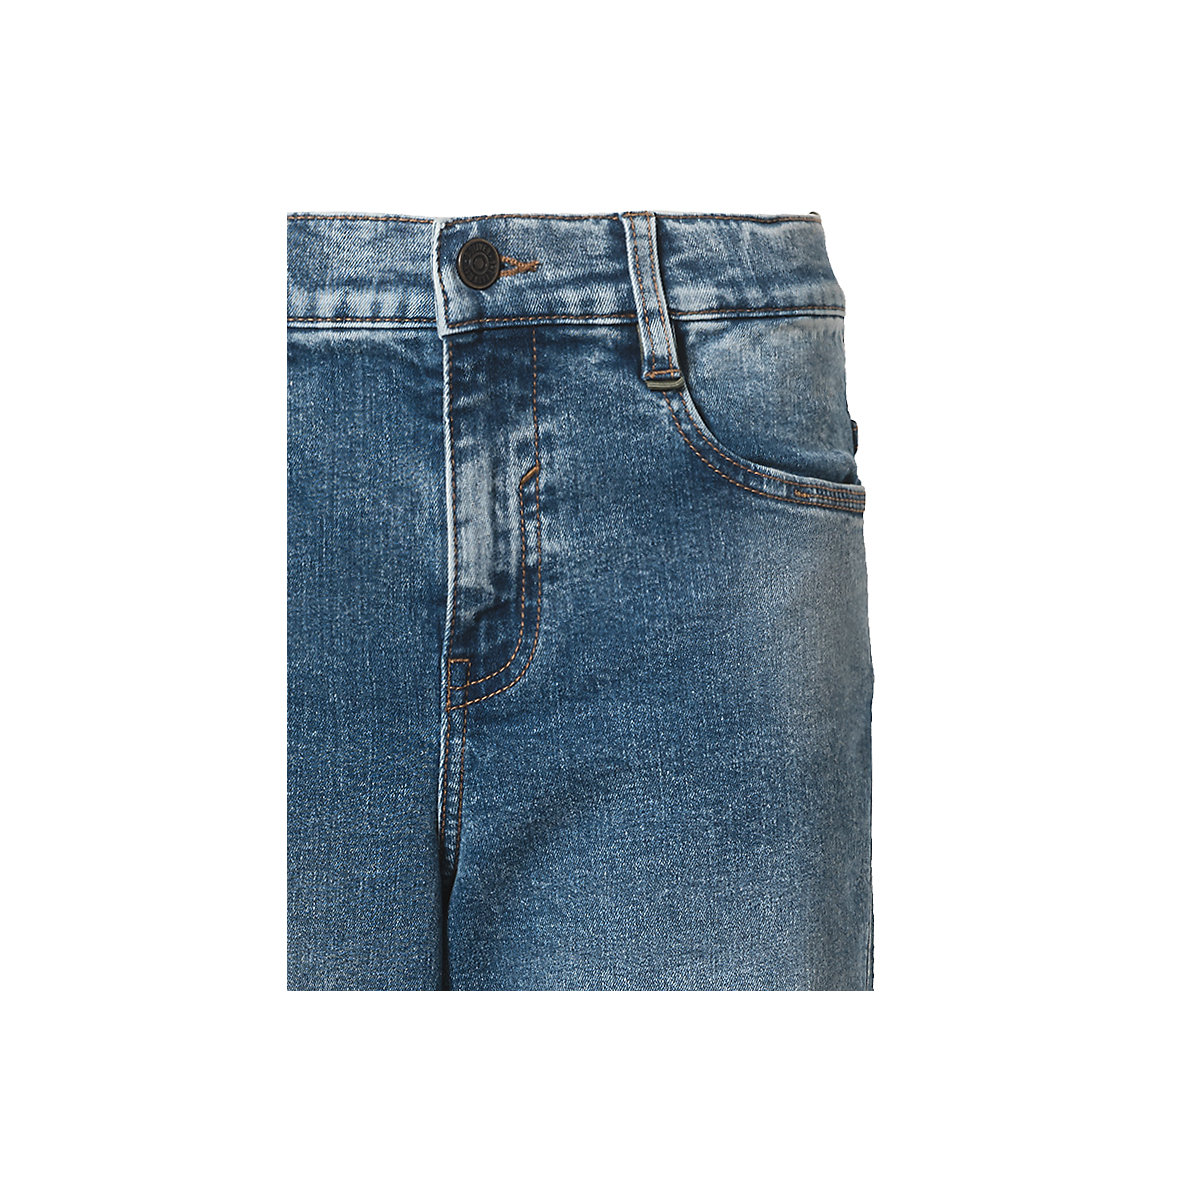 s.Oliver Jeans Dad-Fit für Jungen Passform Regular blau OR8411